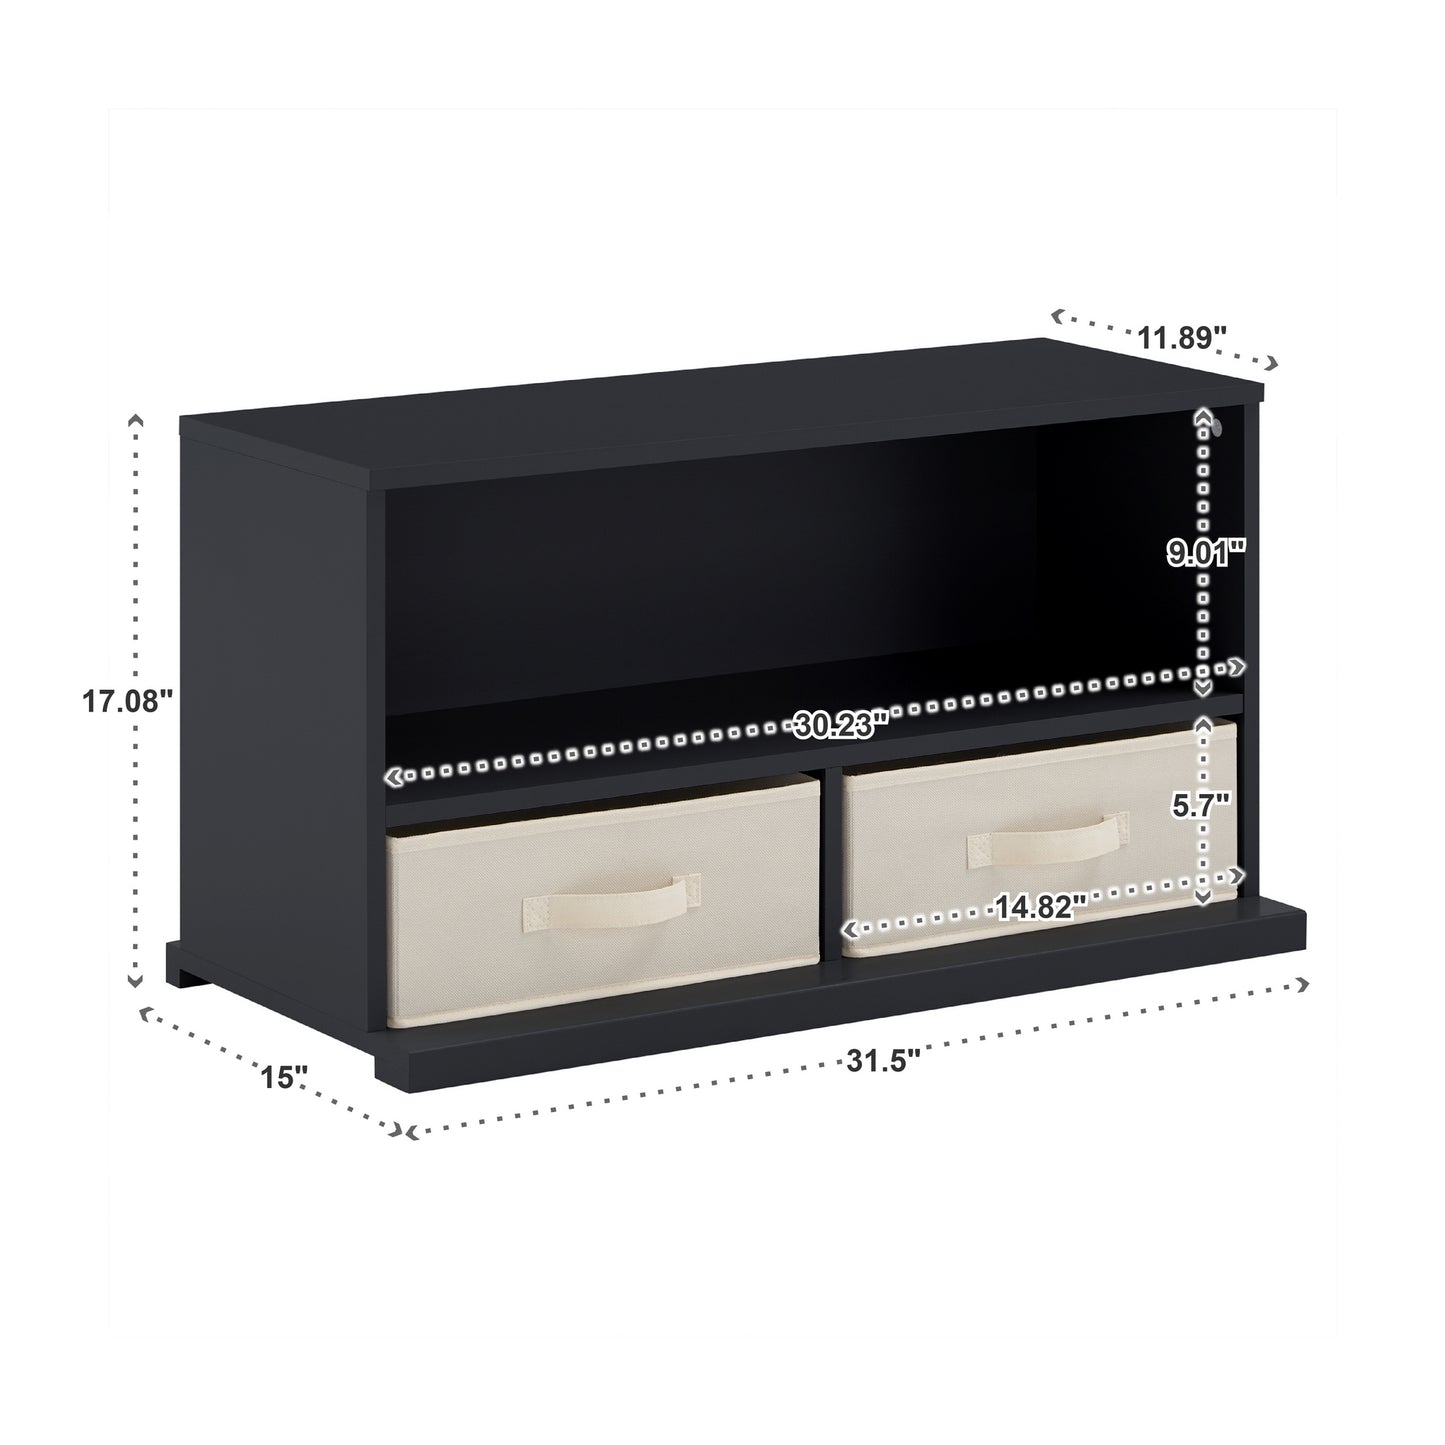 Modular Stacking Storage Bins - Charcoal Black, 1 Box with 2 Drawers